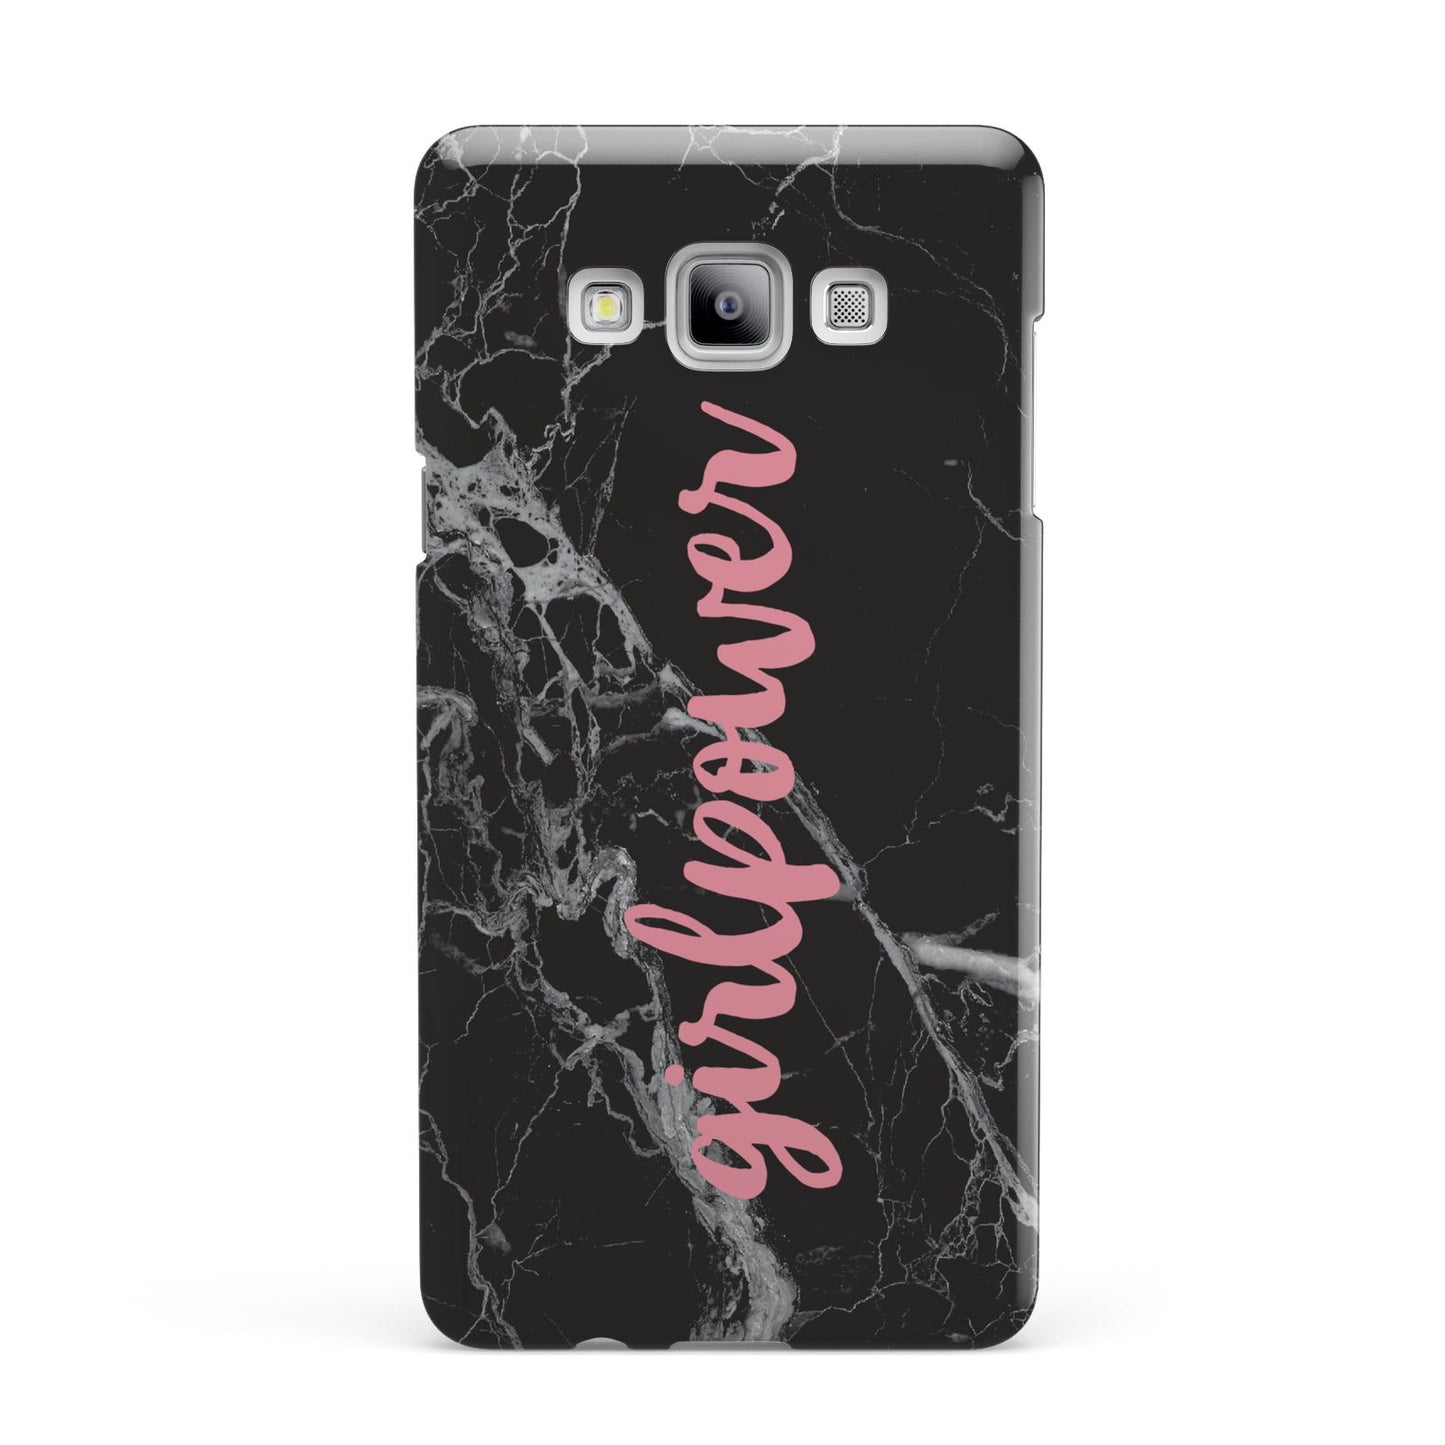 Girlpower Black White Marble Effect Samsung Galaxy A7 2015 Case